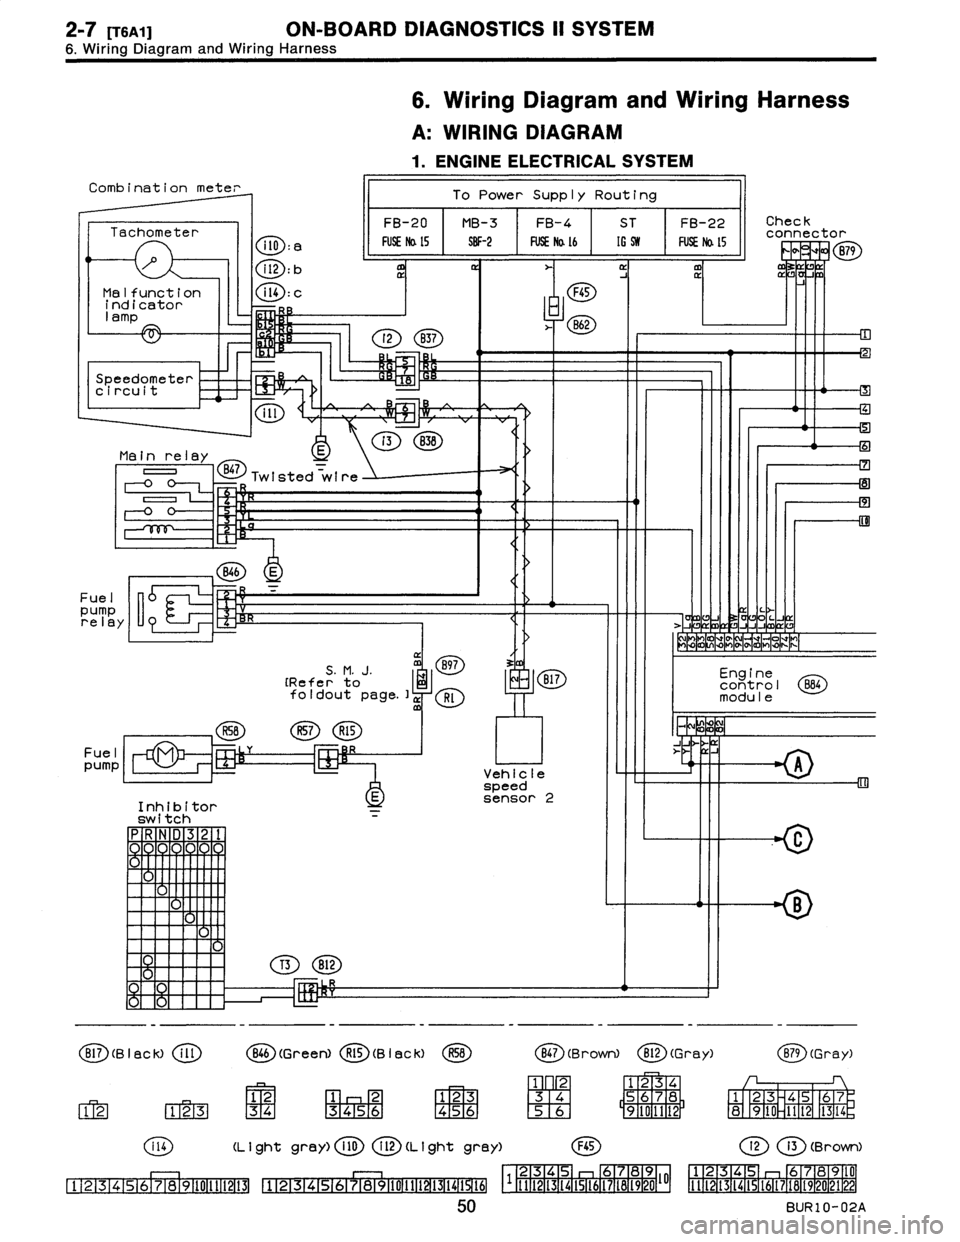 SUBARU LEGACY 1996  Service Repair Manual 2-7
(T6A1]
ON-BOARD
DIAGNOSTICS
II
SYSTEM

6
.
Wiring
Diagram
and
Wiring
Harness

Combination
mete

Tachometer
il0
:e

i
12
:
b

Malfunction
I
il4
:c
indicator
~--
lamp

Speedometer
circuit

ill

Main